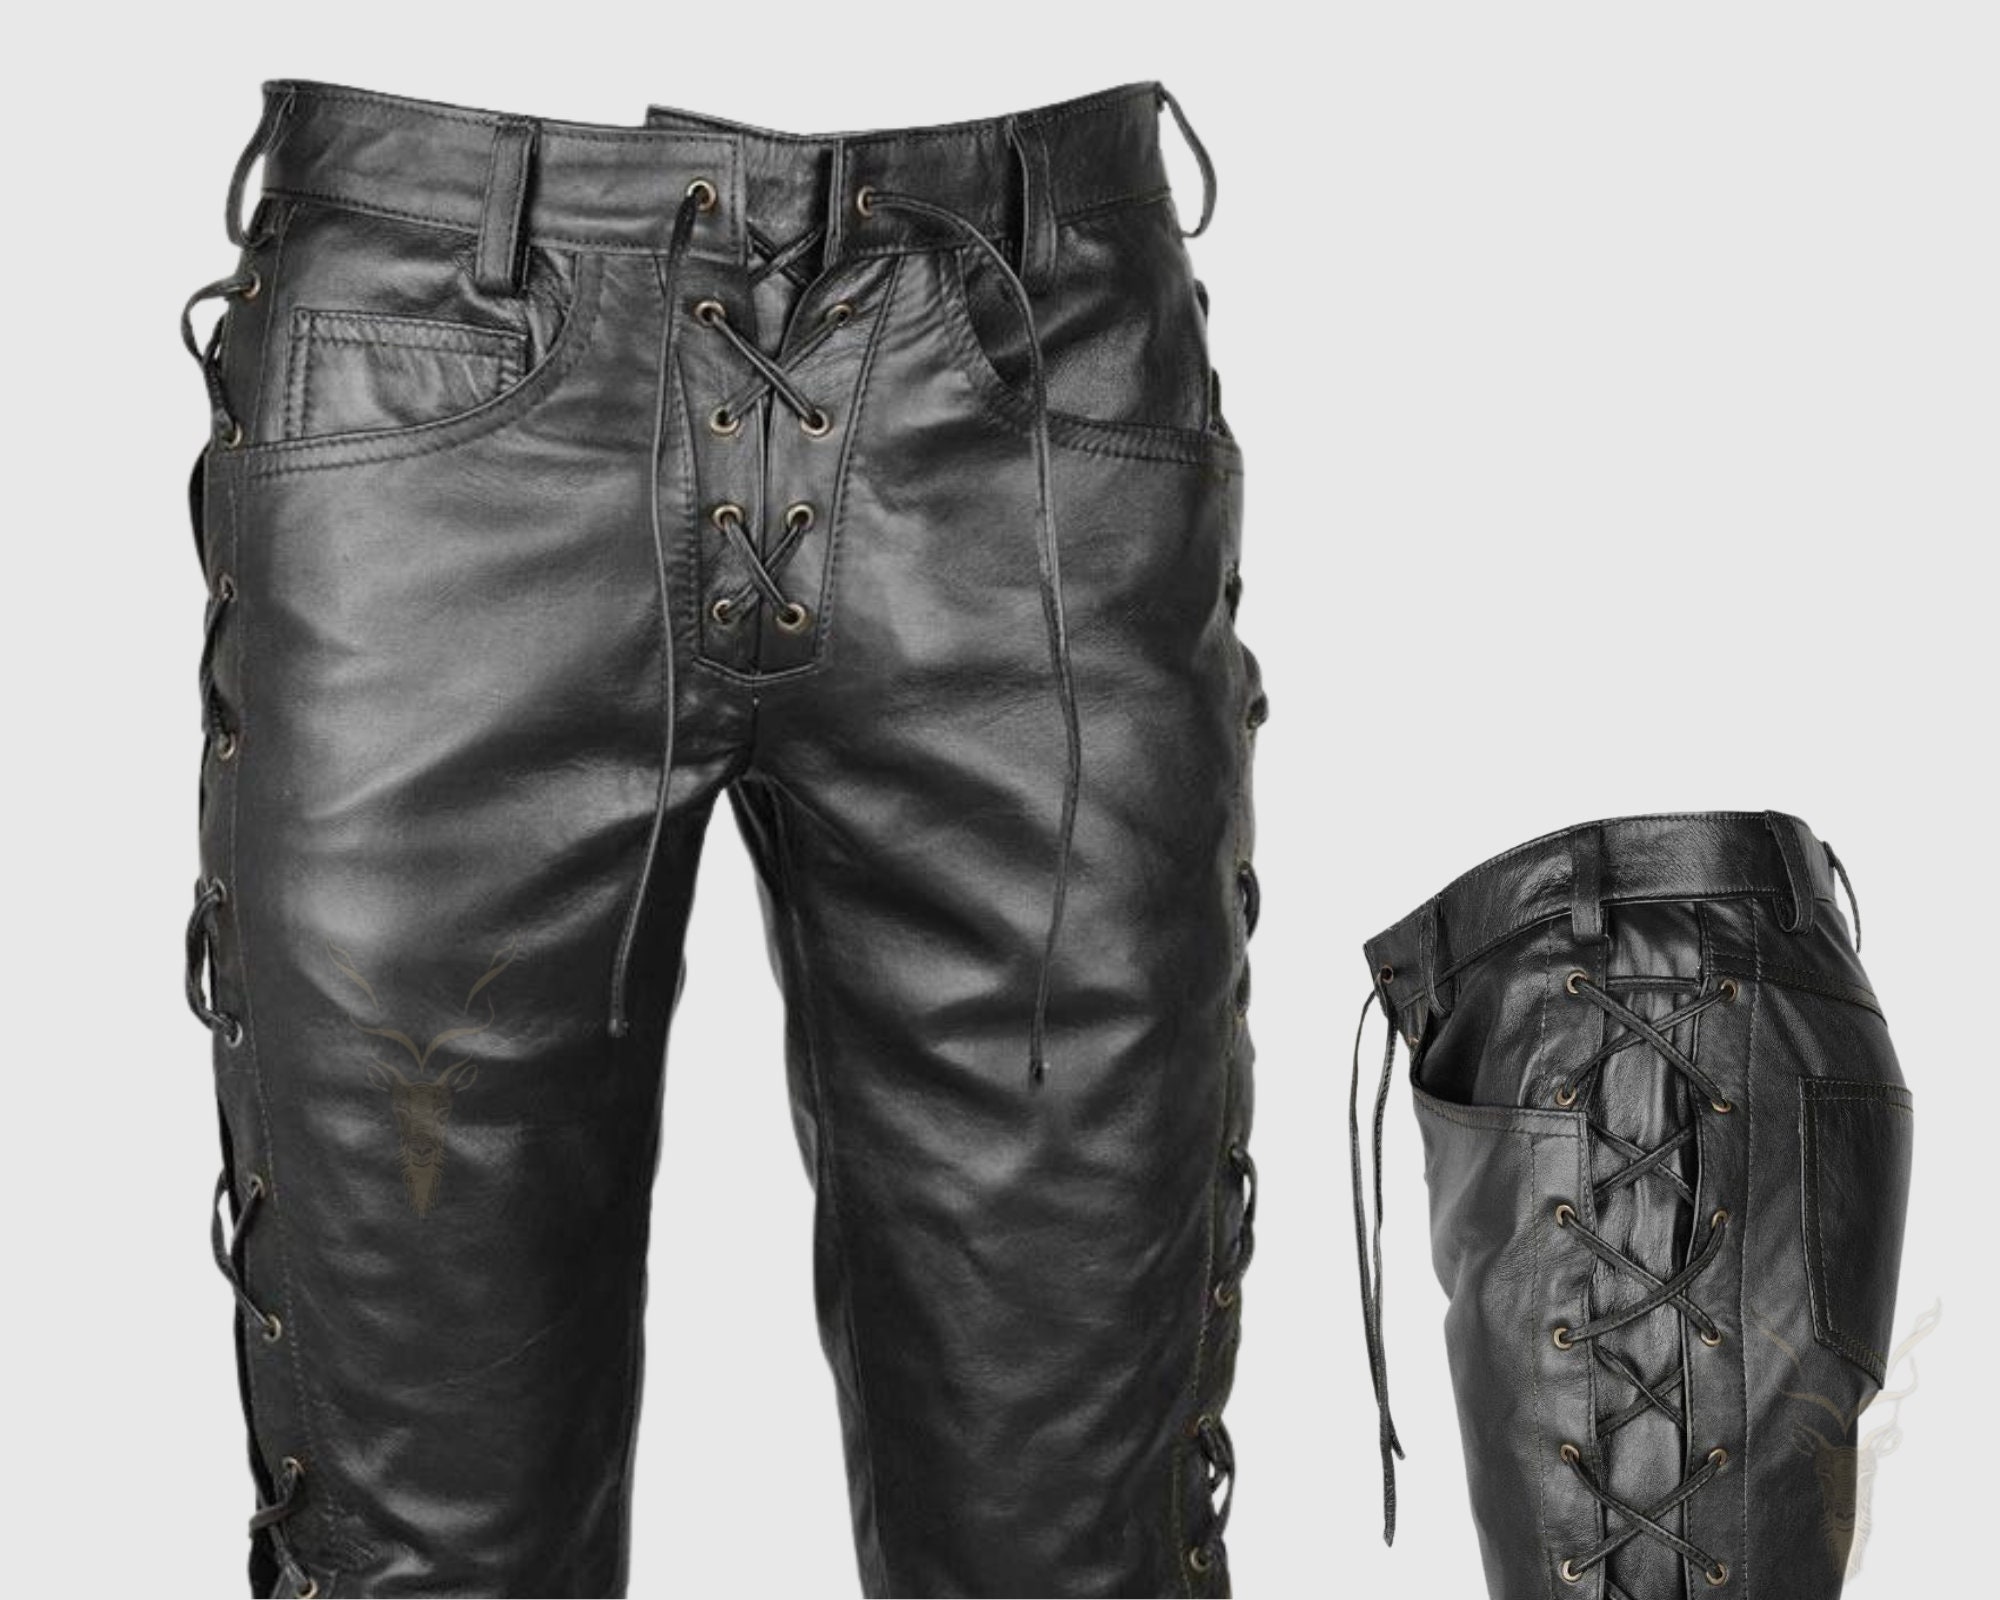 Mens Rockstar Style Genuine Black Leather Biker Pant